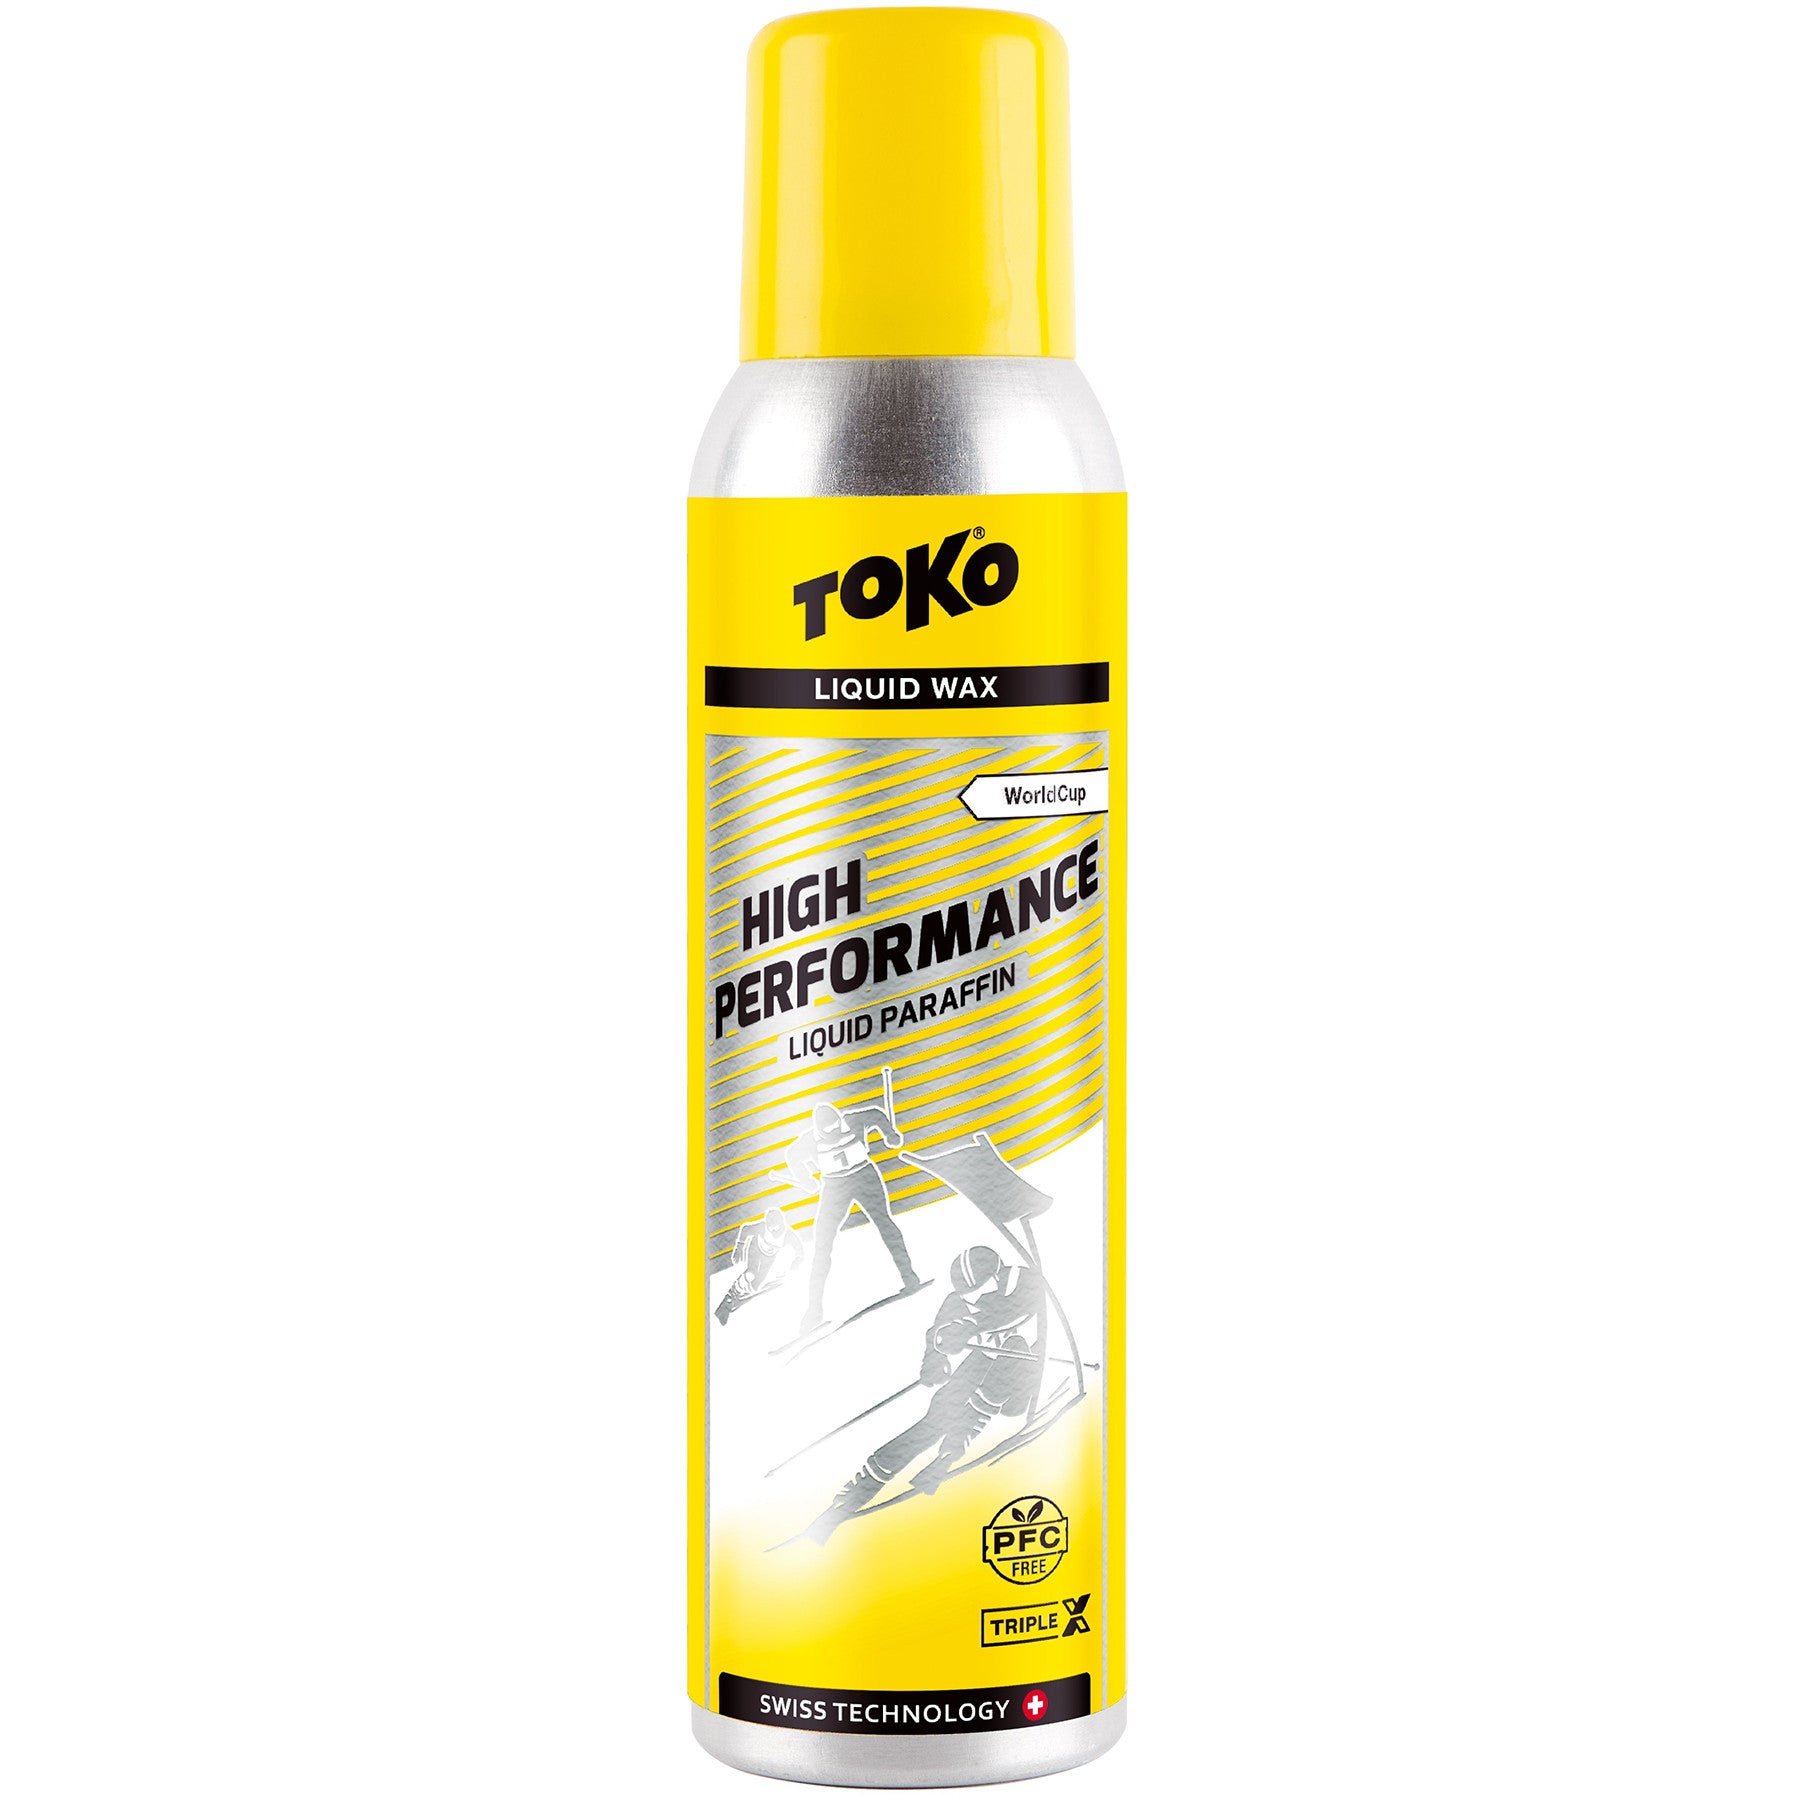 Toko High Performance Liquid Glide Wax 125ml - 0